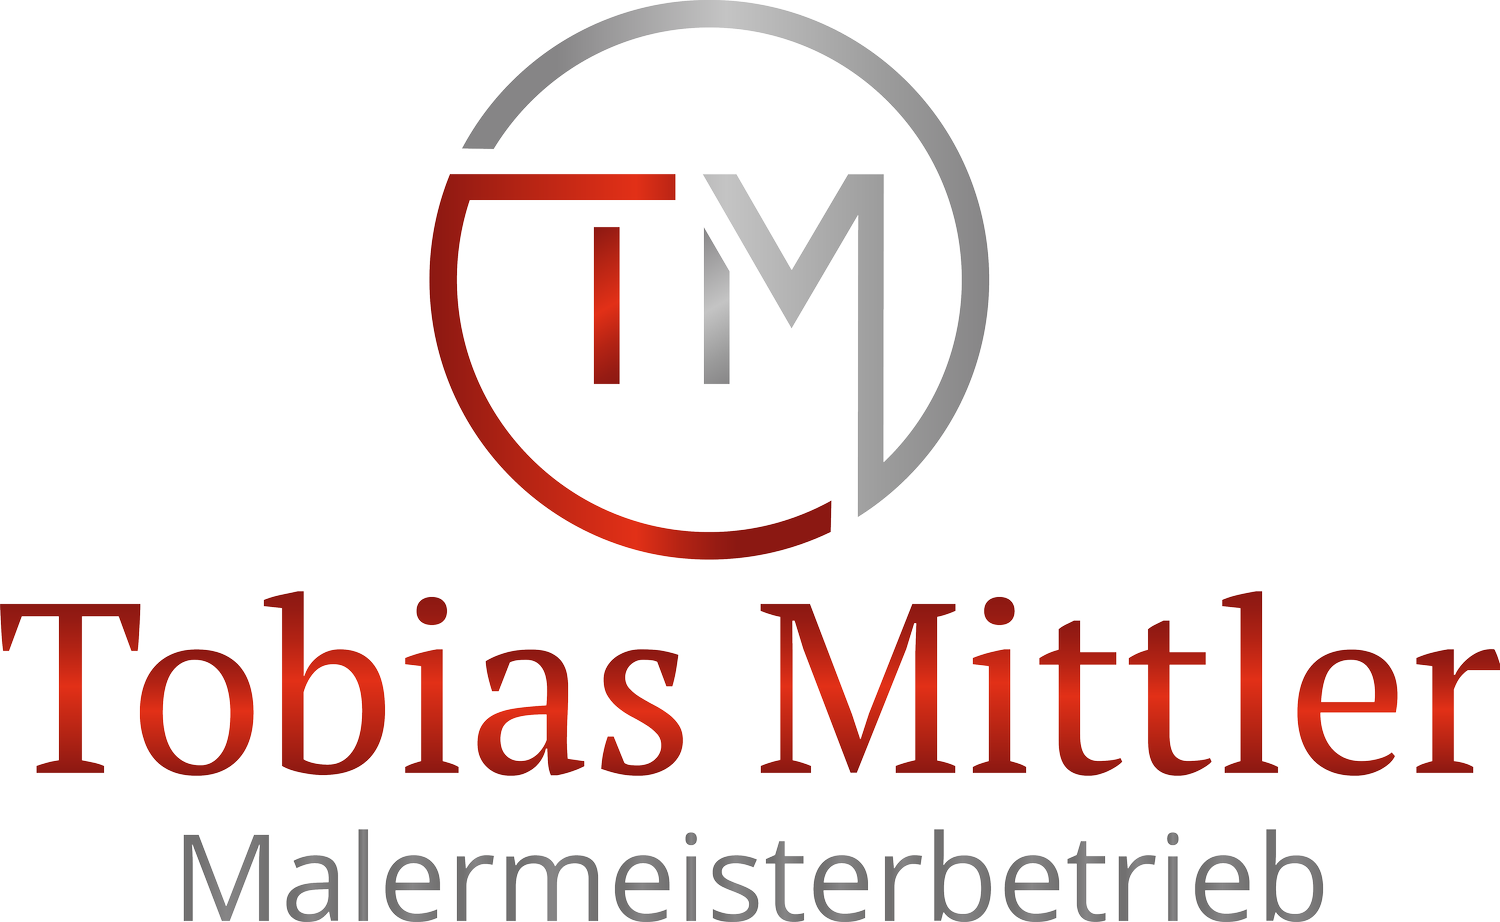 Malermeisterbetrieb Tobias Mittler